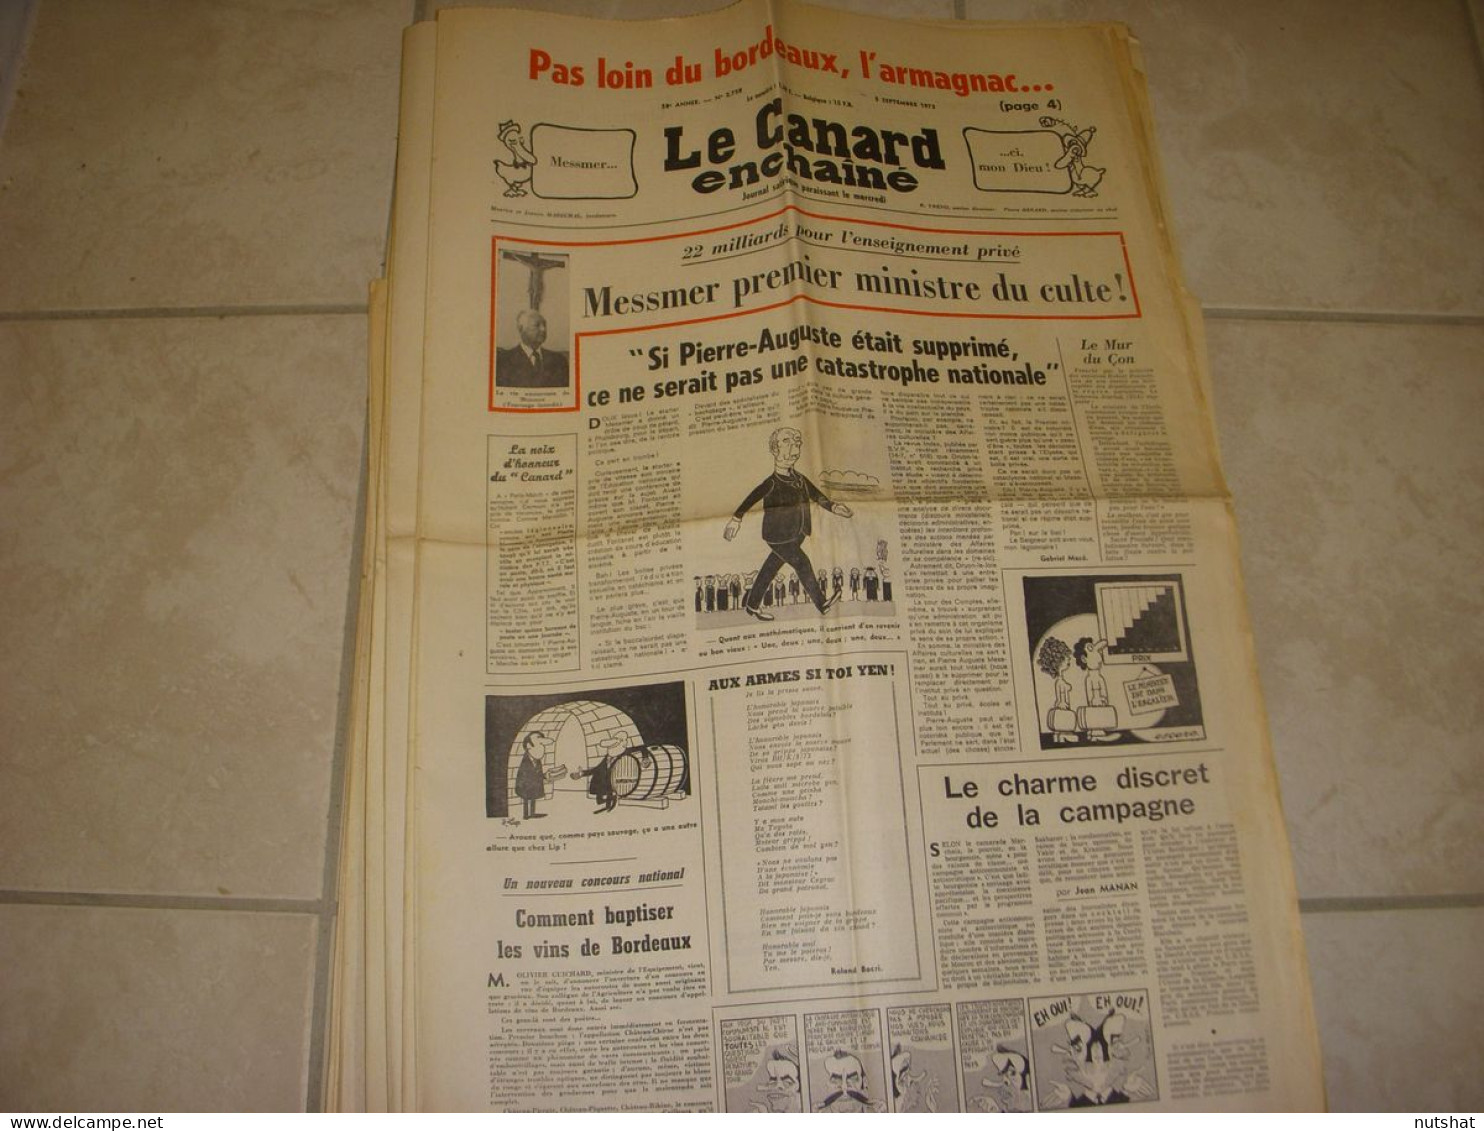 CANARD ENCHAINE 2758 05.09.1973 Le MLF Michel POLAC Benigno CACERES Guy LUX - Politiek